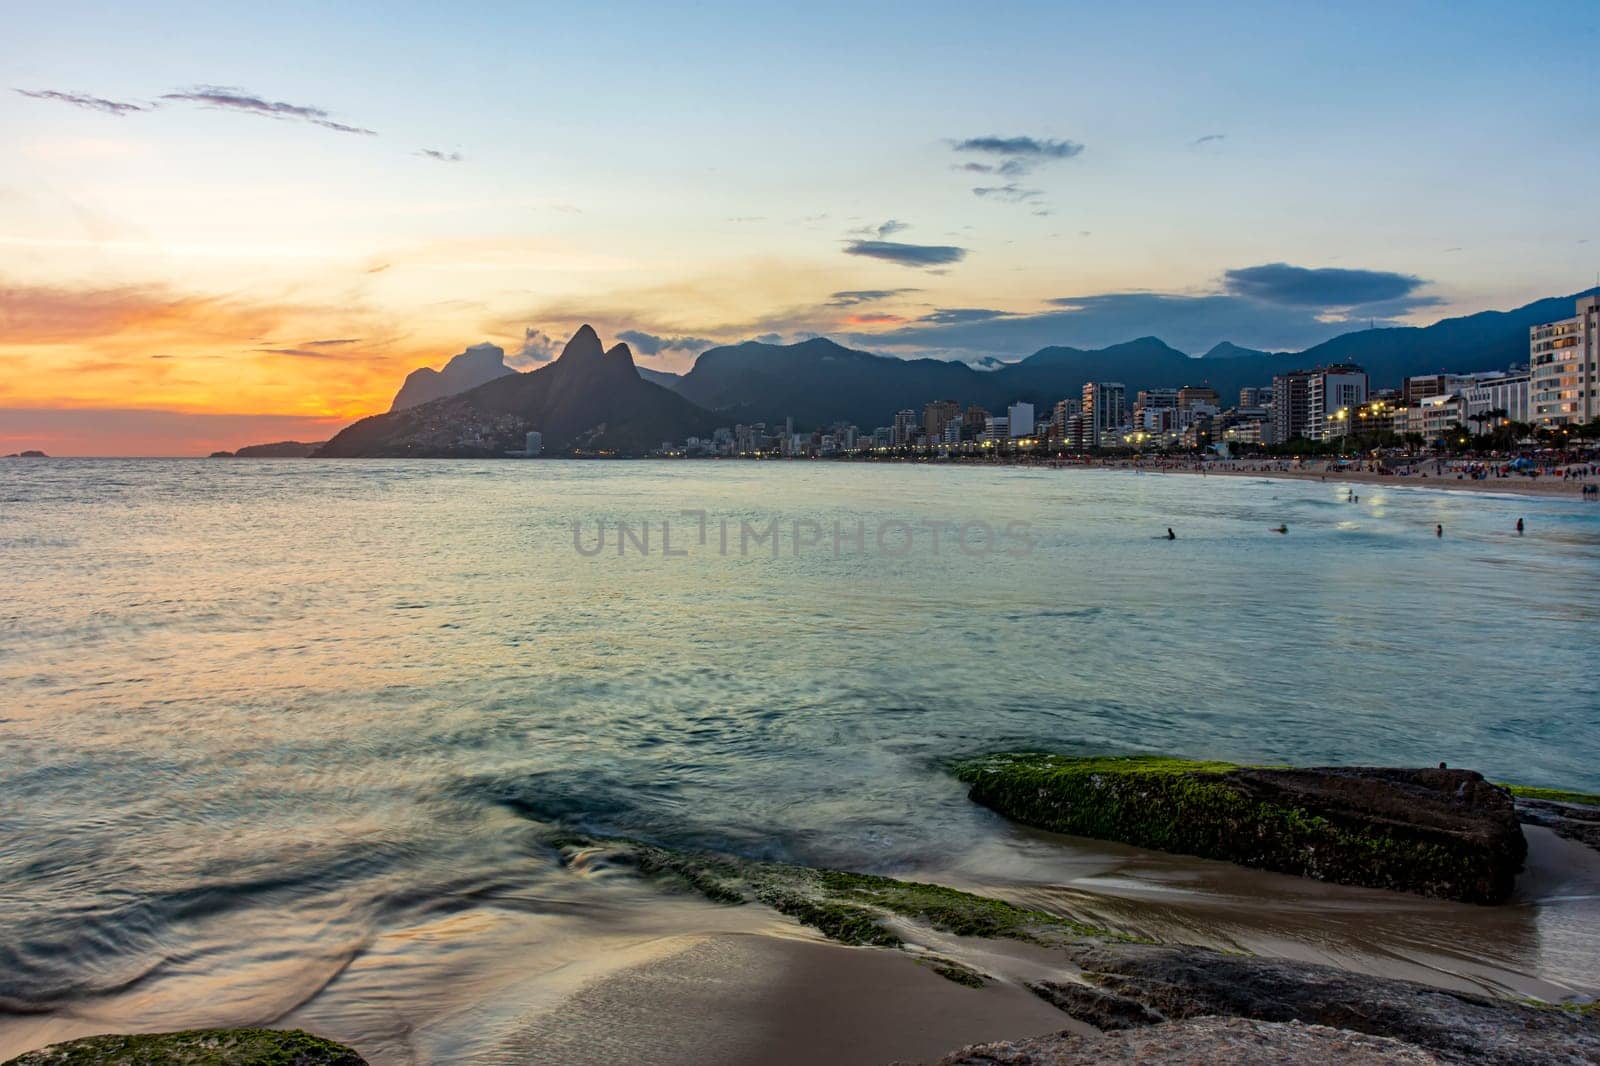 Sunset at Ipanema beach by Fred_Pinheiro